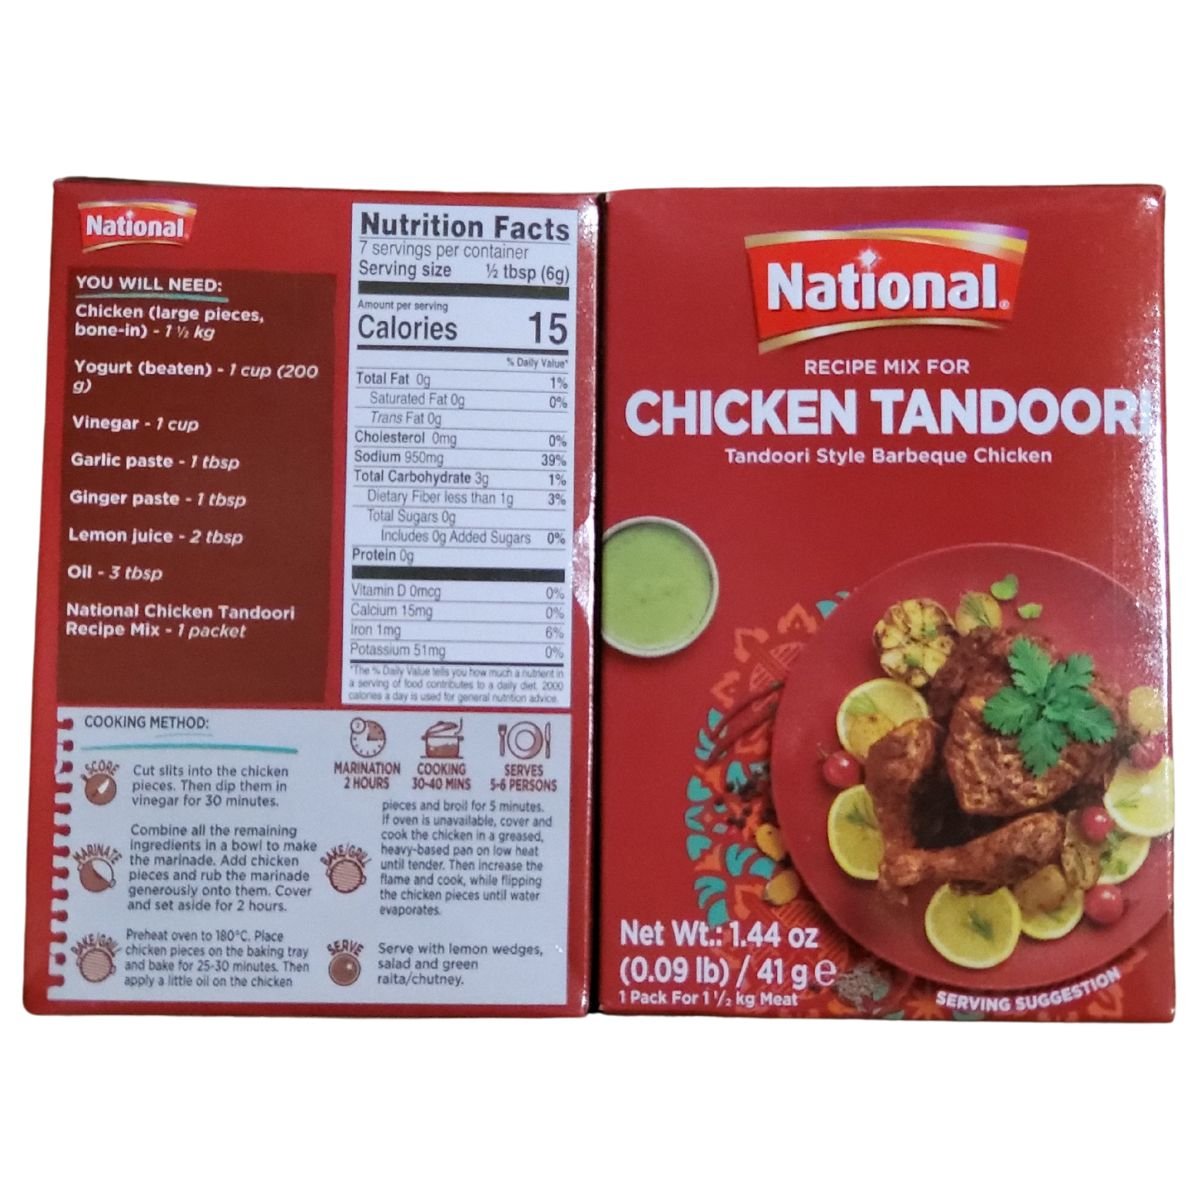 National Spice Mix For Chicken Tandoori 41g (1.44oz)